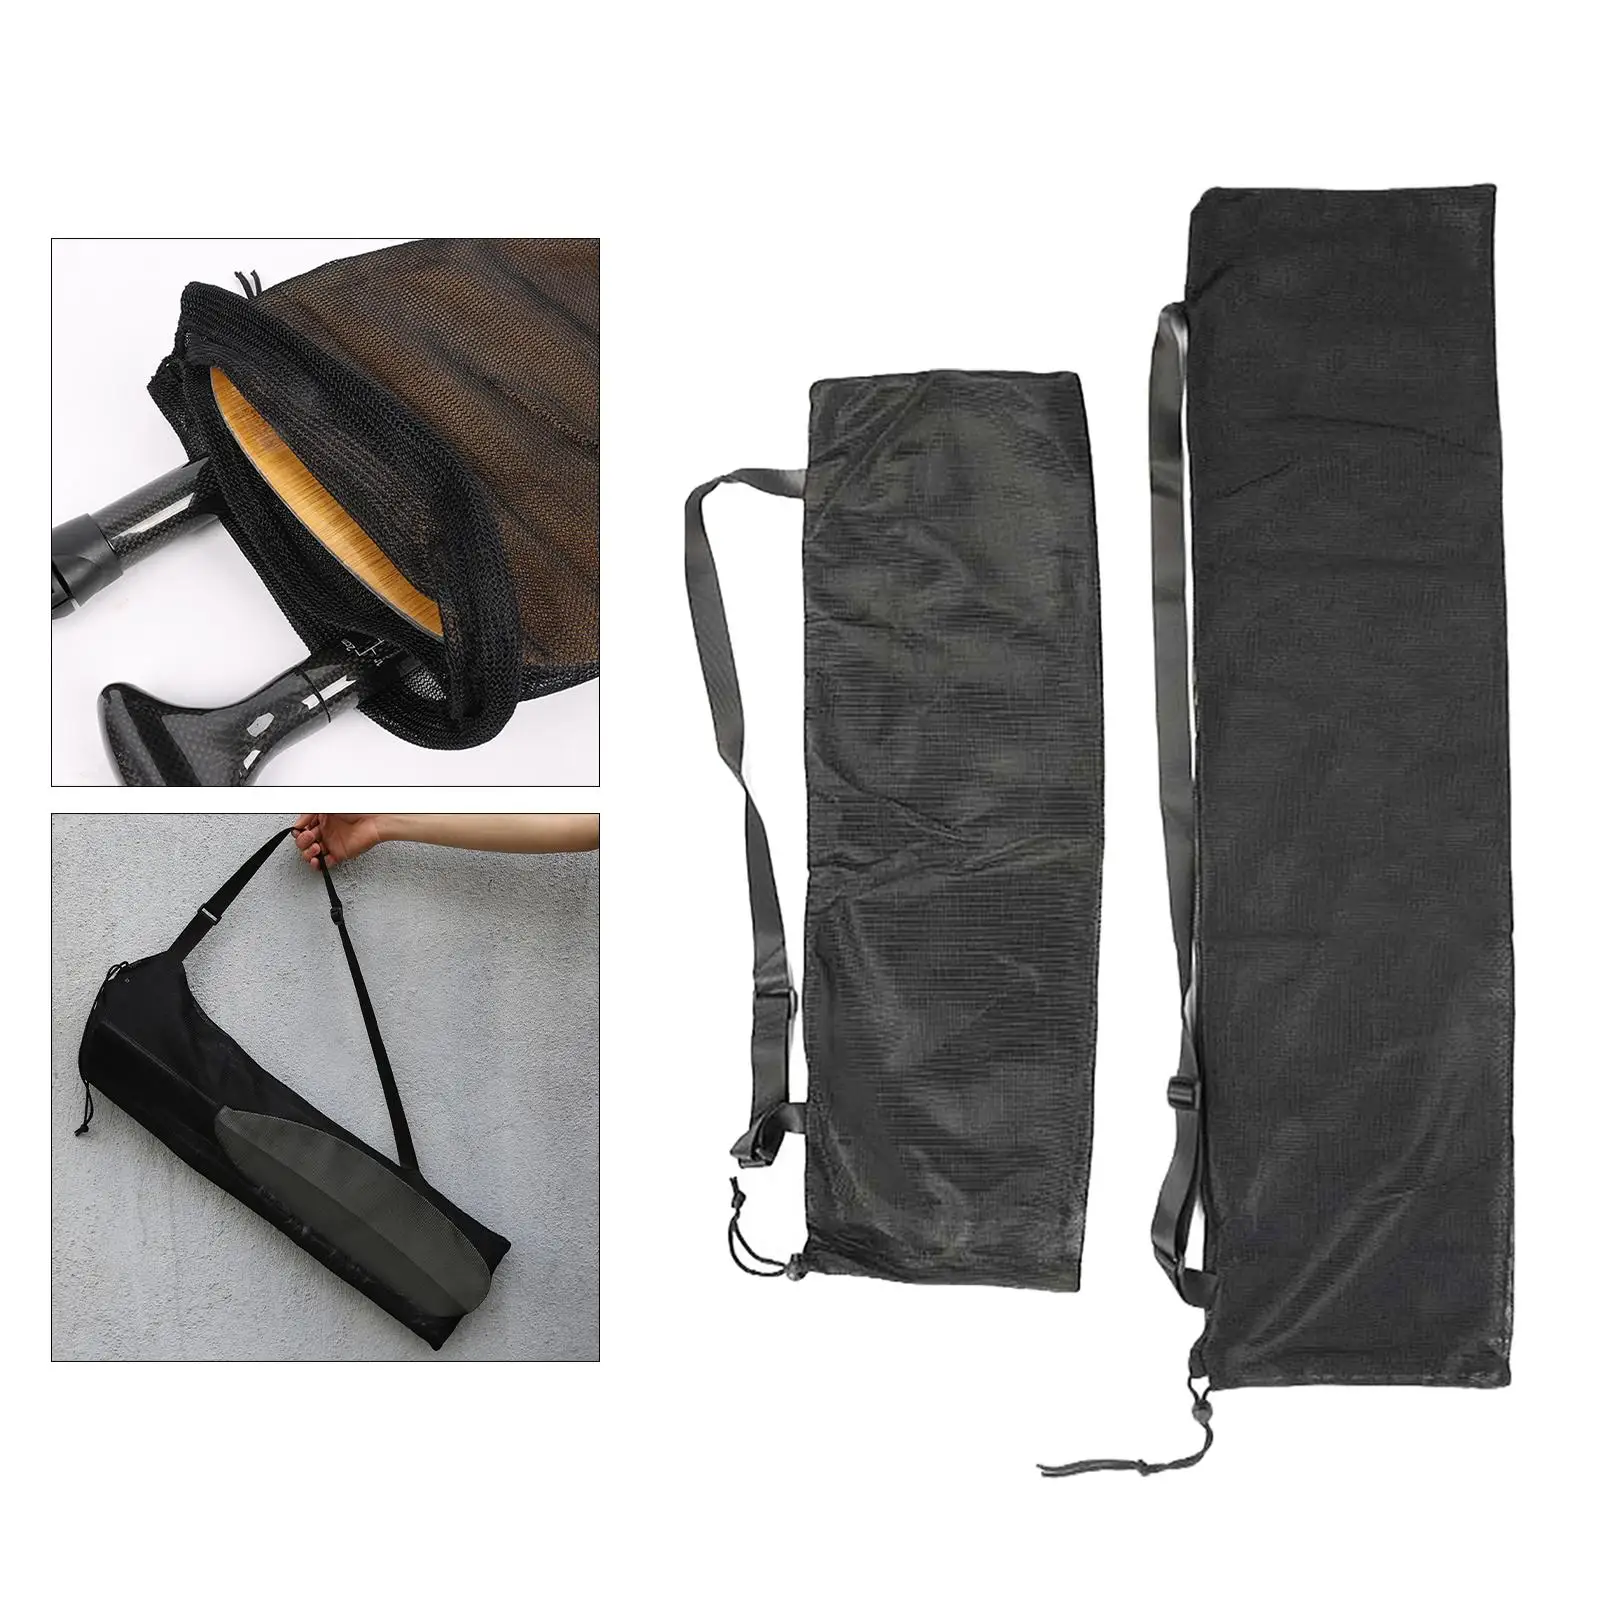 Kayak Boat Canoe Paddle Storage Bag Pouch Cover Split Kayak Accessory Paddle Bag With Shoulder Strap